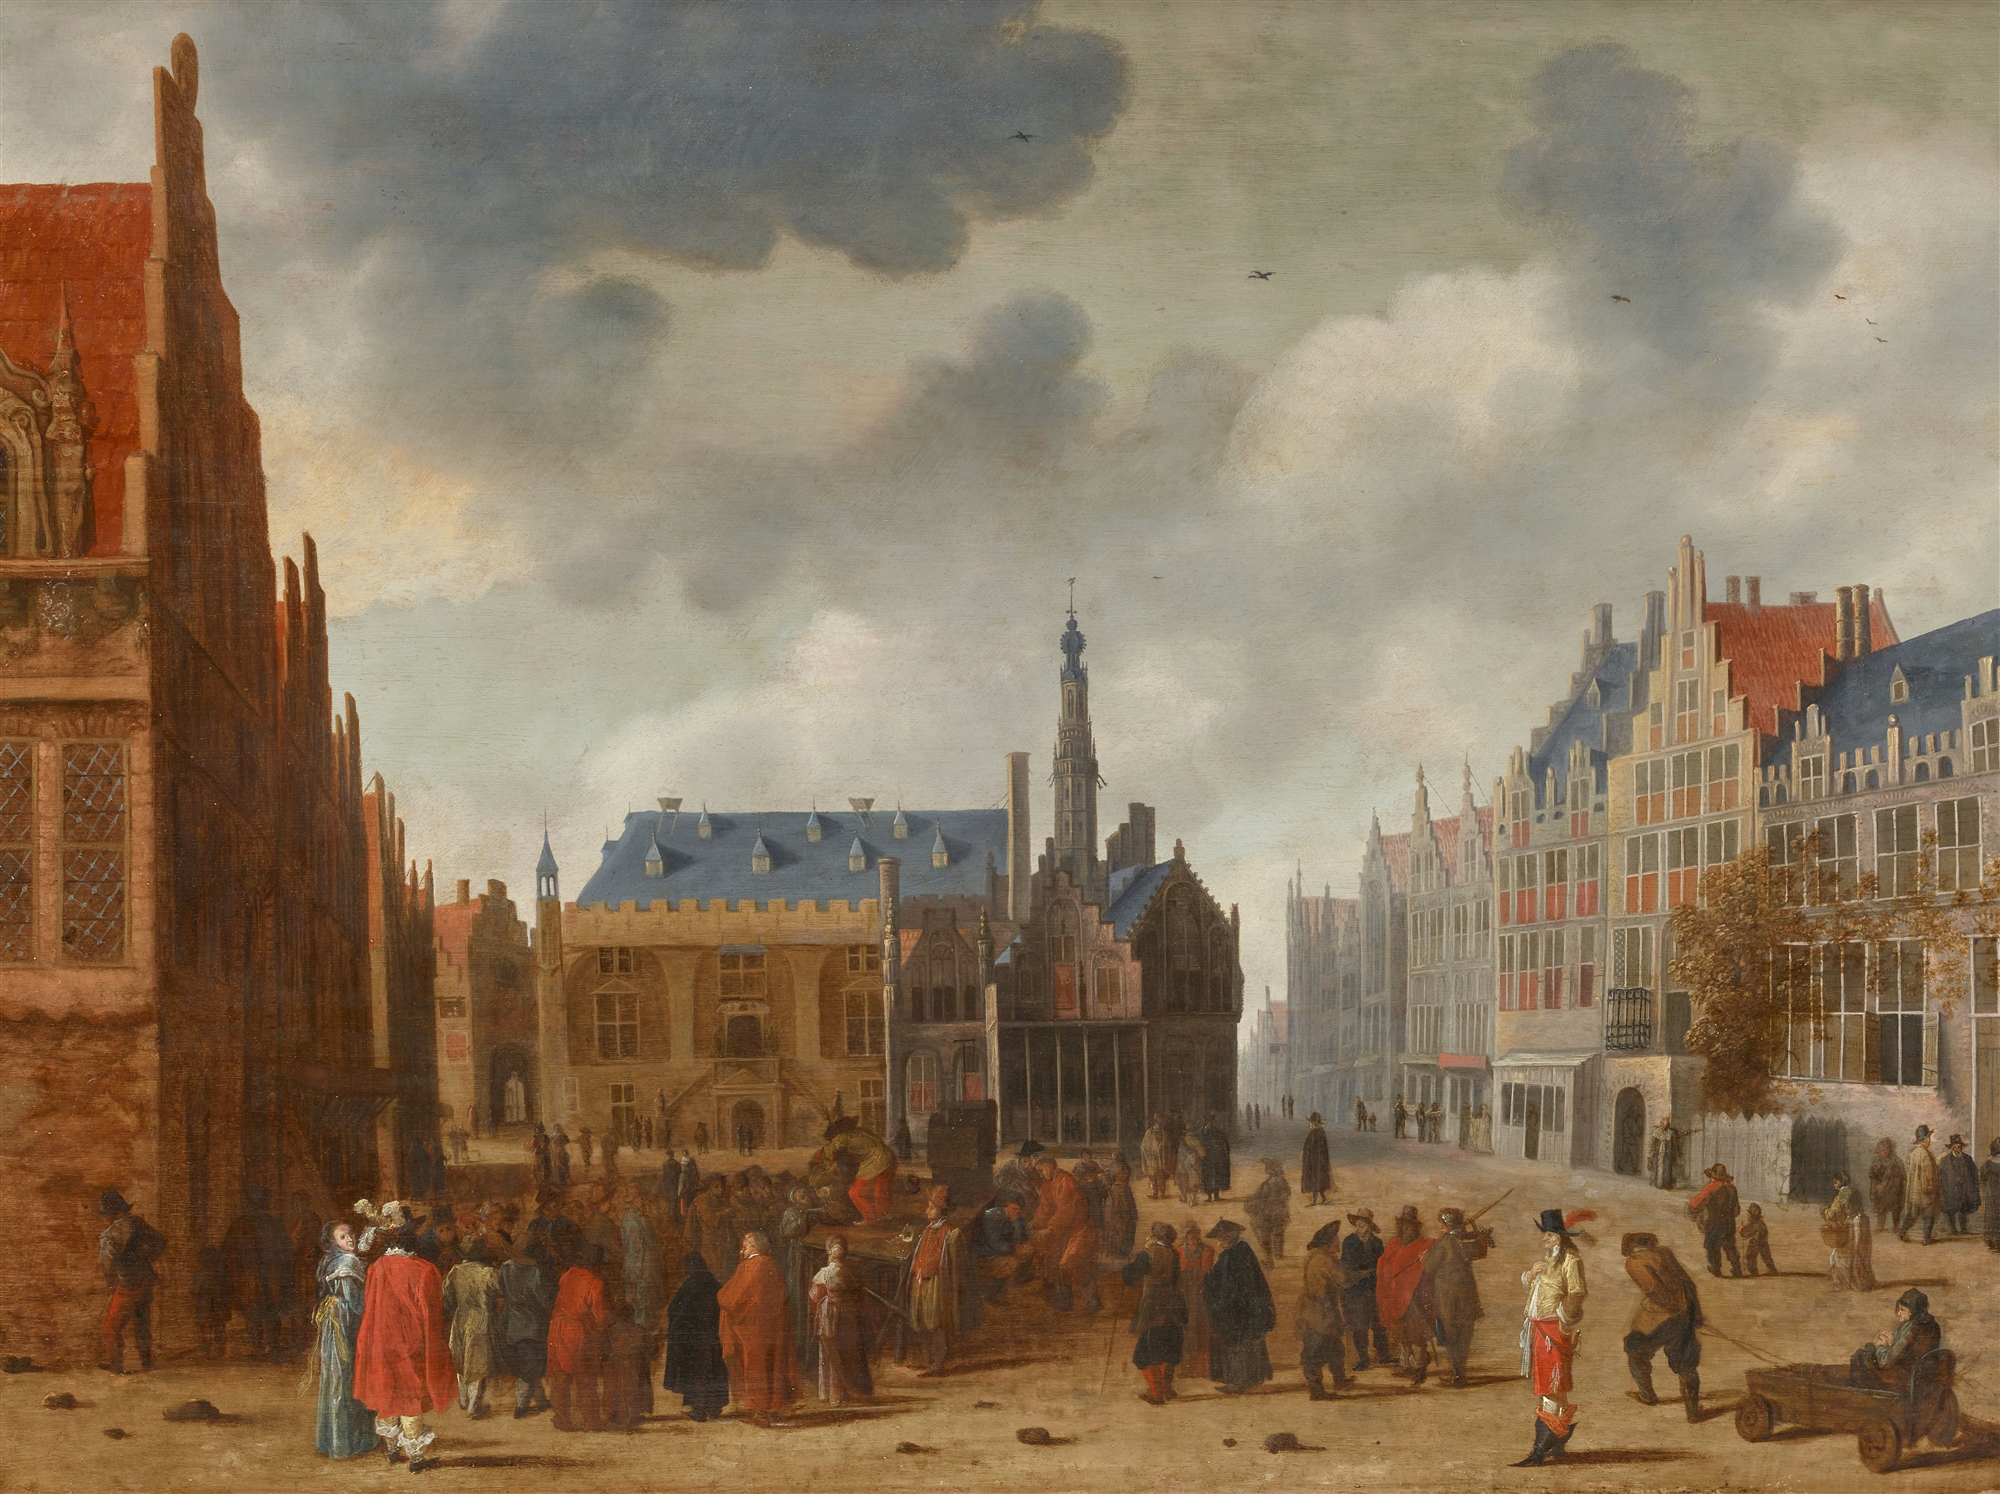 Haarlem School 1640s, The Grote Markt in Haarlem